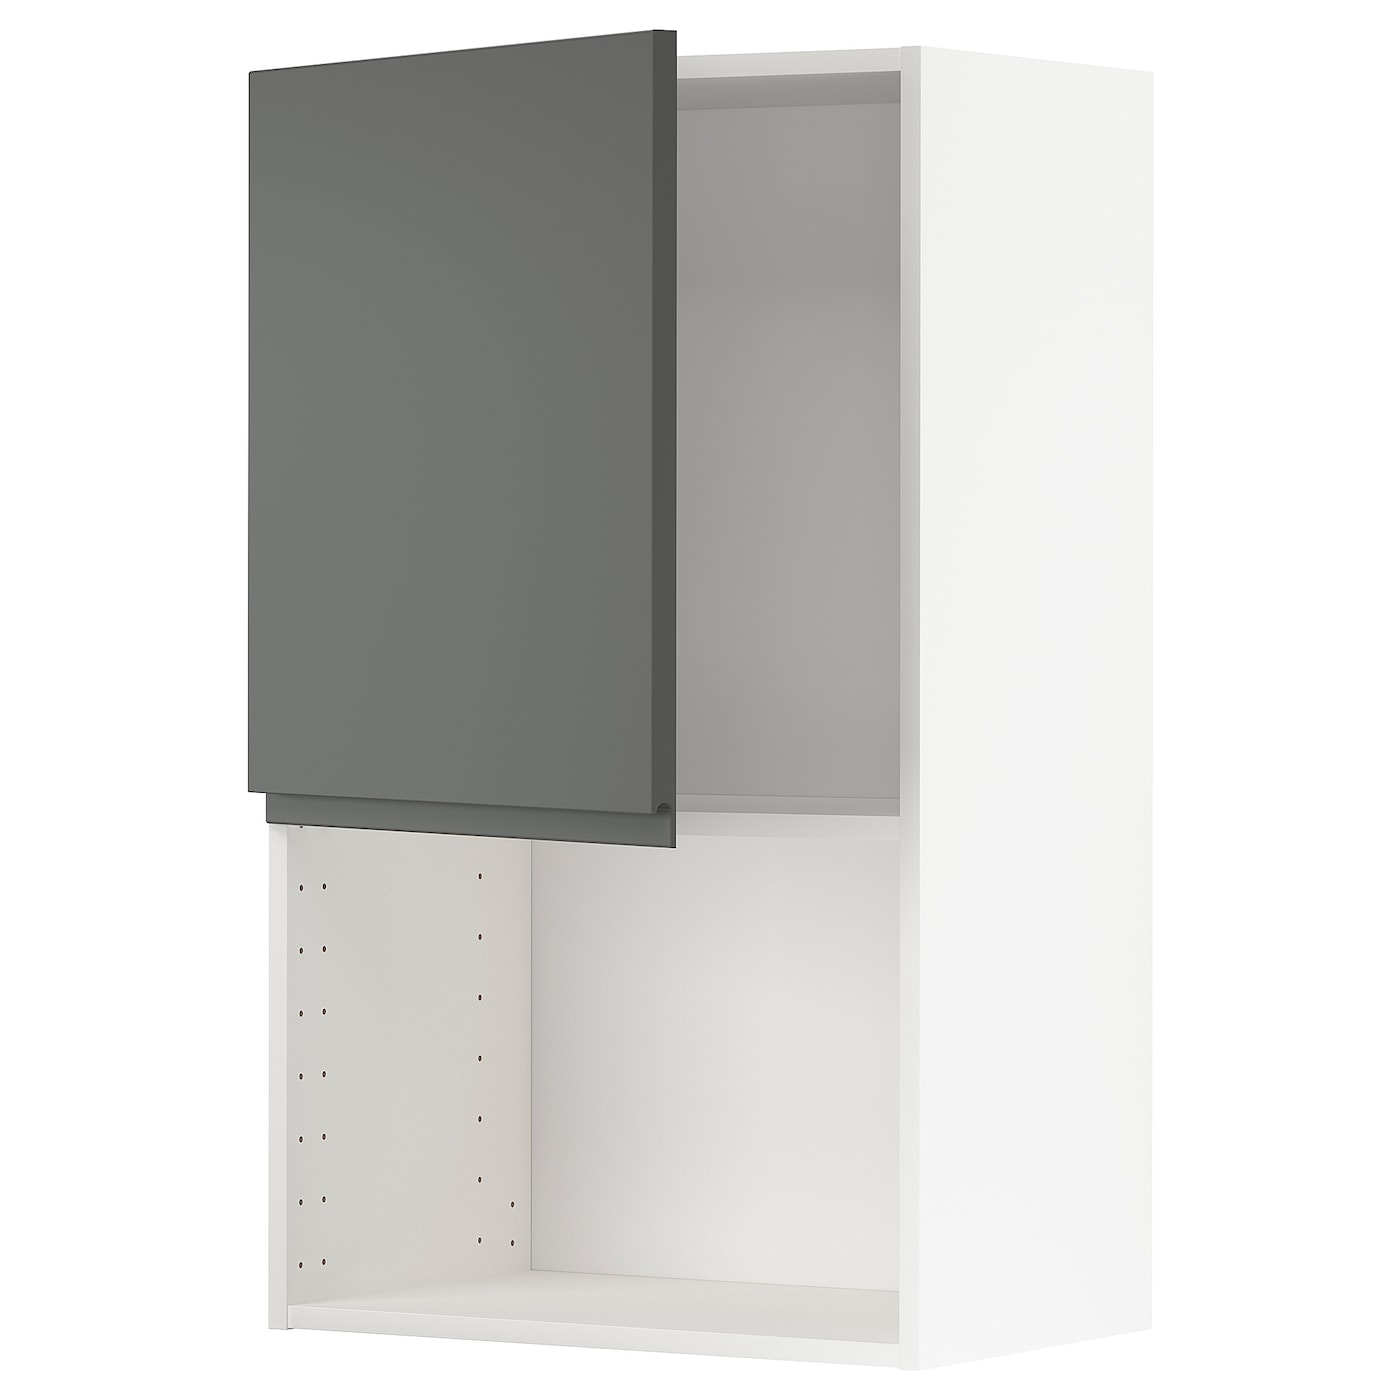 METOD Навесной шкаф - METOD IKEA/ МЕТОД ИКЕА, 100х60 см, белый/серый